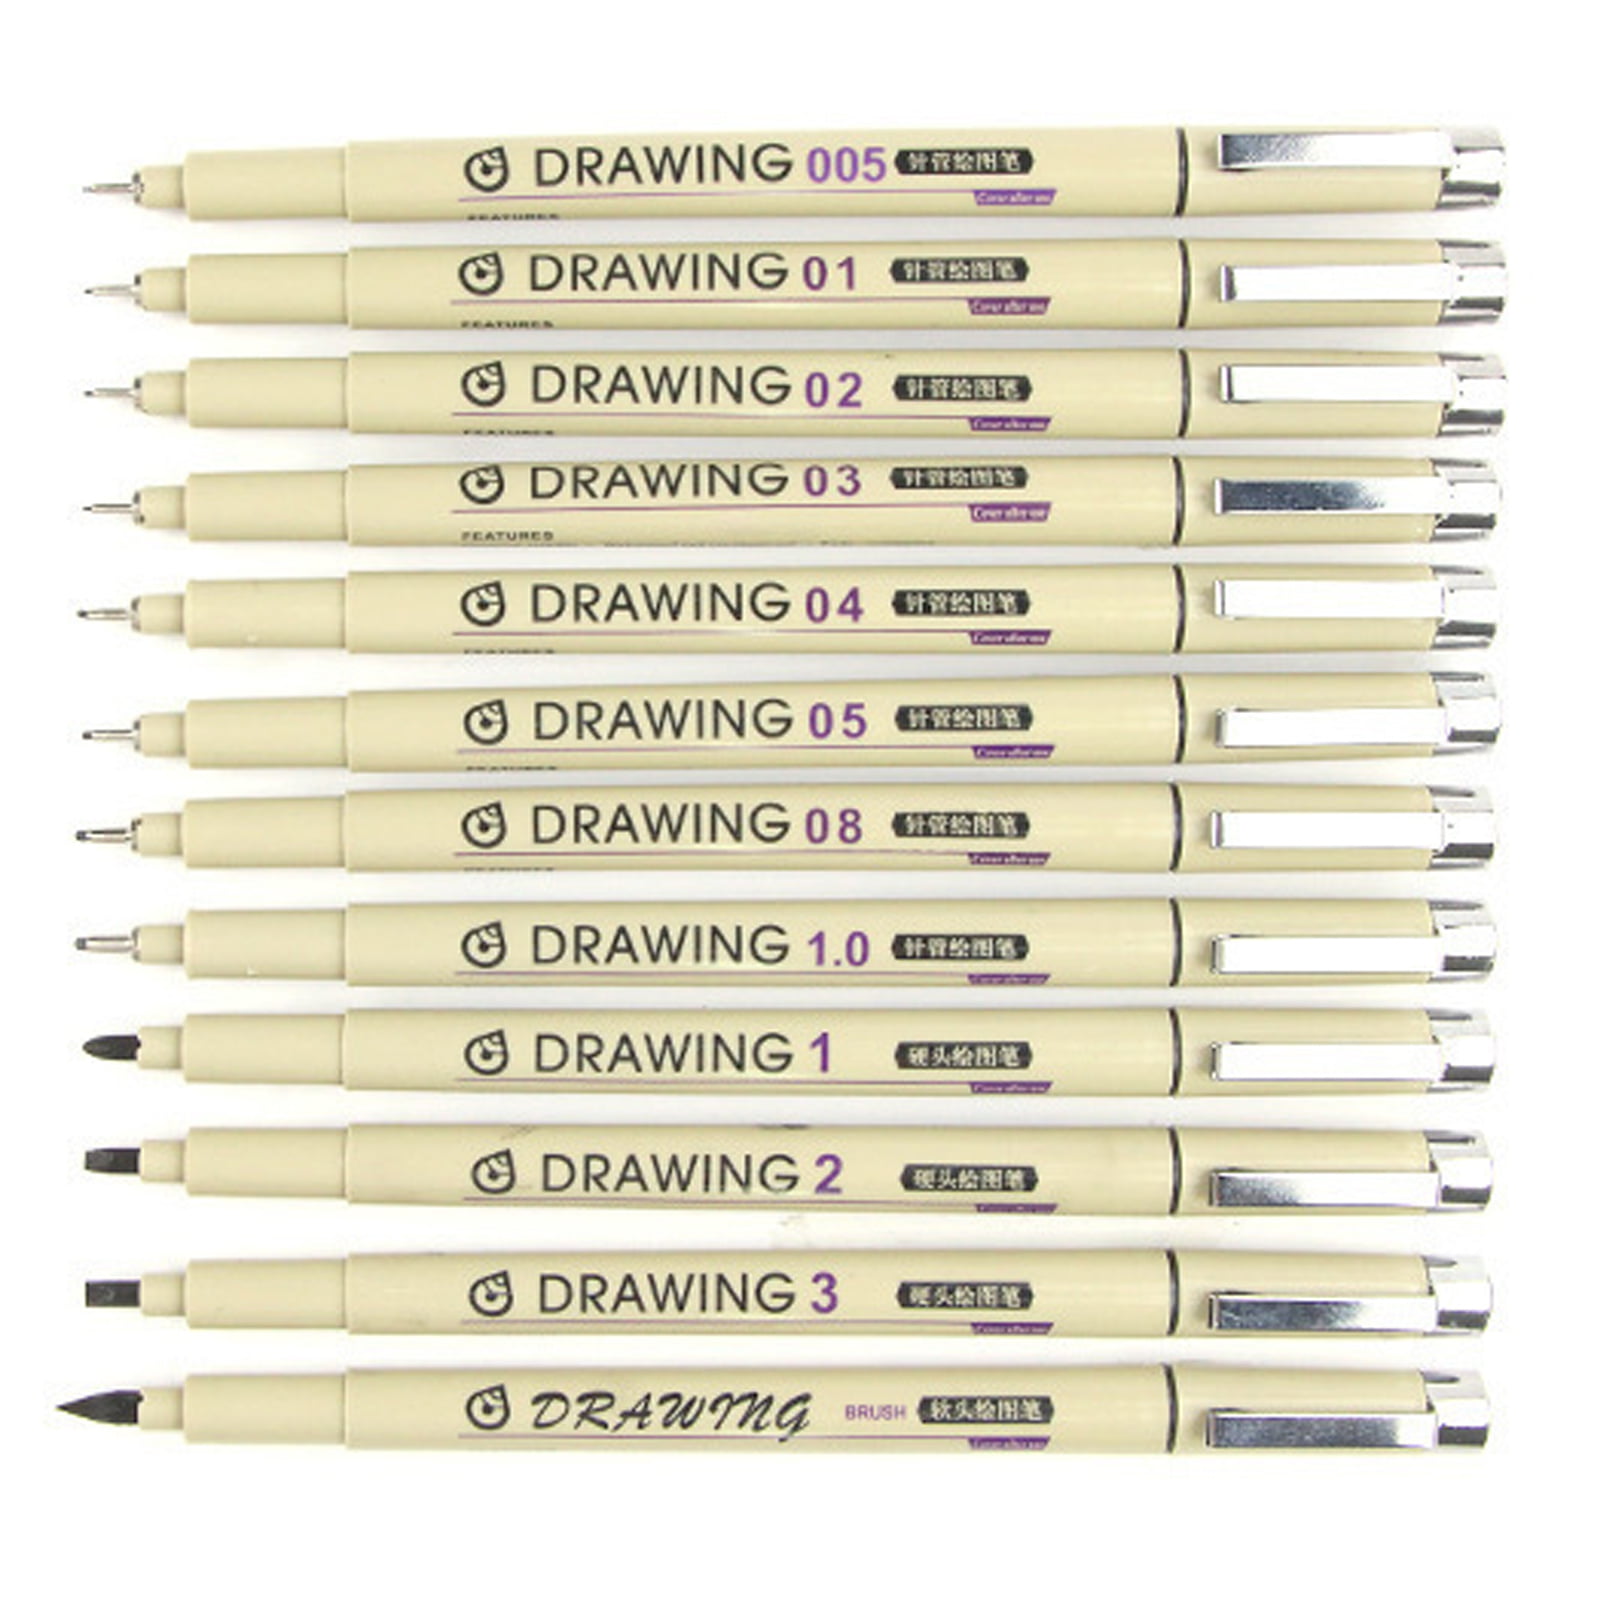 Micro Fineliner Drawing Art Pens: 6 Black Fine Line Waterproof Ink Set  Artist Supplies Archival Inking Markers Pigment Liner Journaling Sketch  Outline